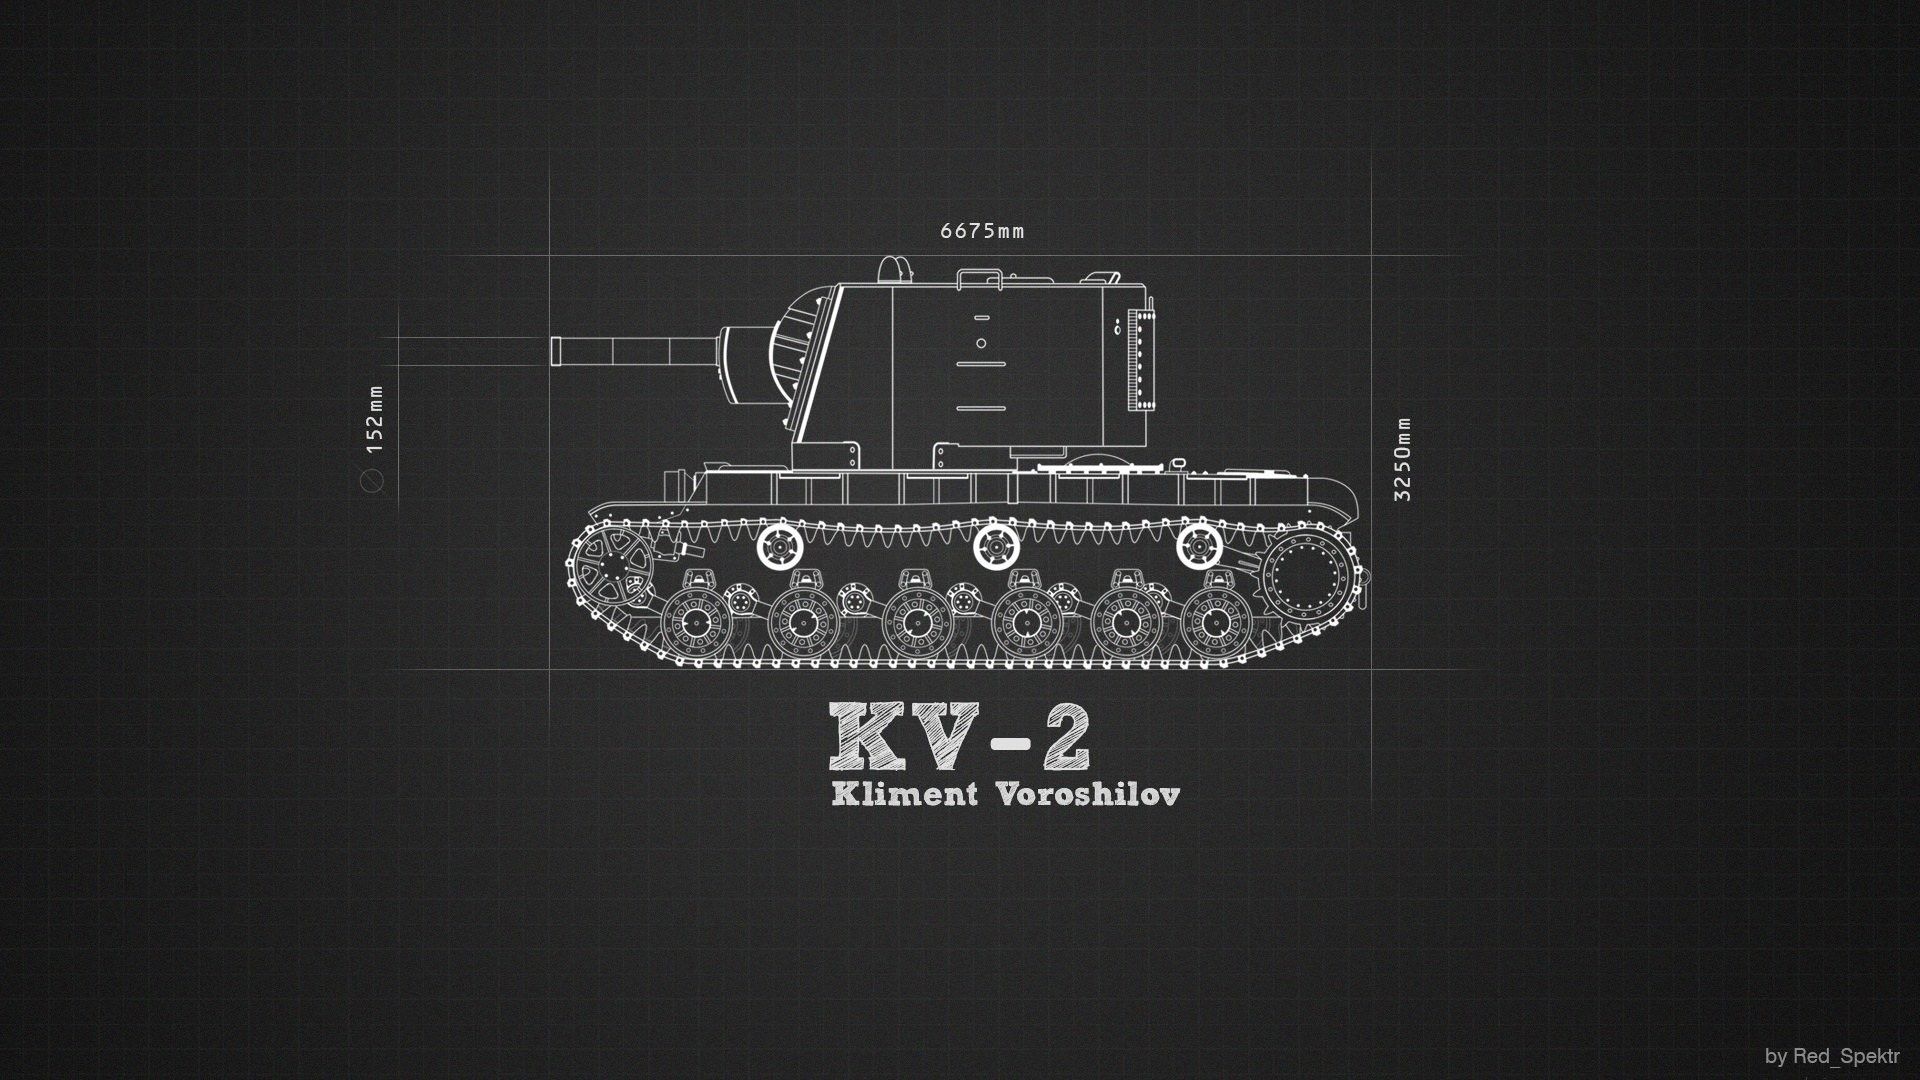 Tank Wallpapers (1920 x 1080 – FULL HD & 1920 x 1200) | The ...